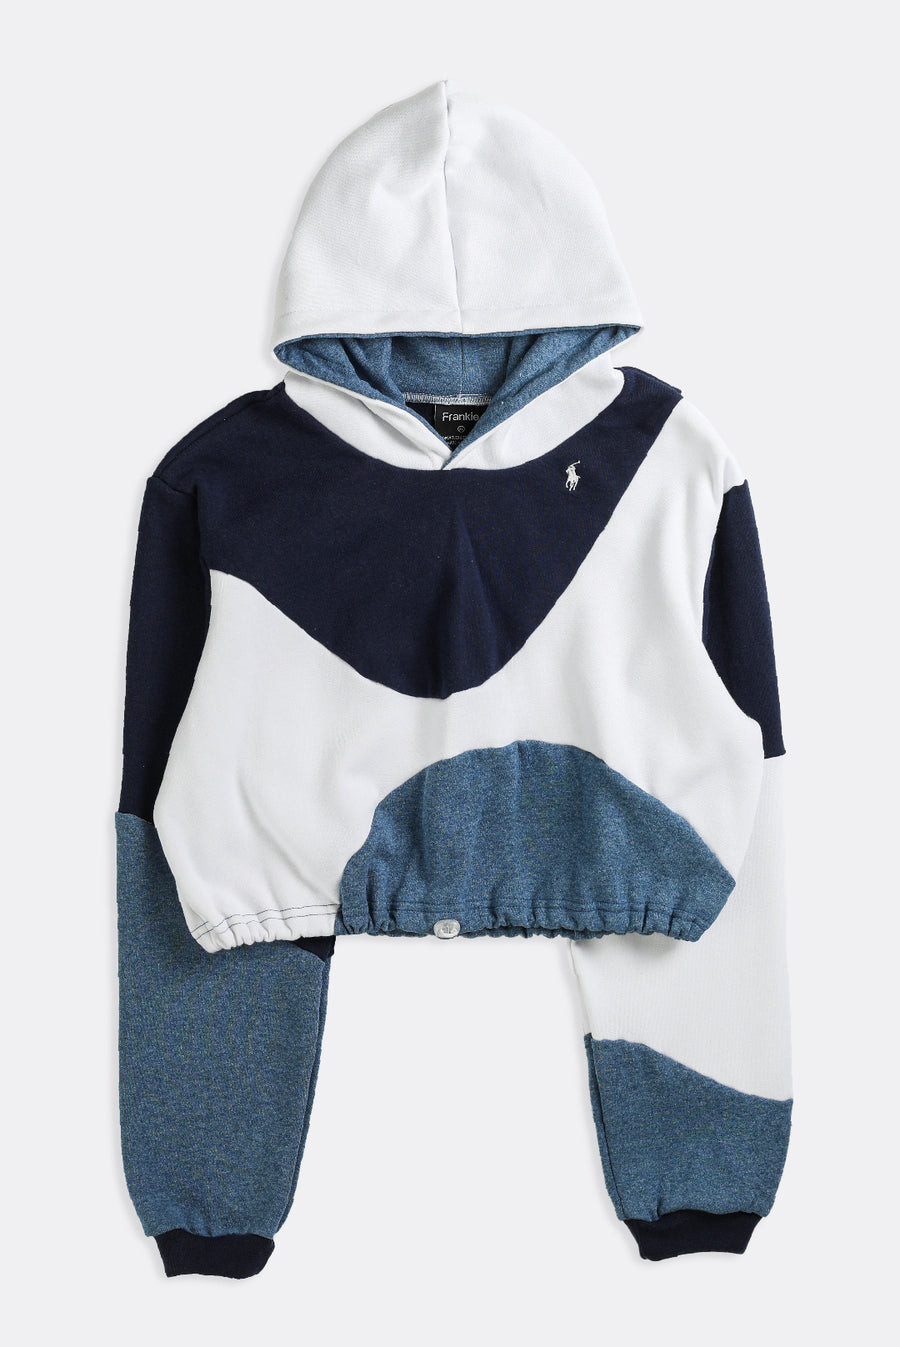 Rework Polo Wave Crop Sweatshirt - XS